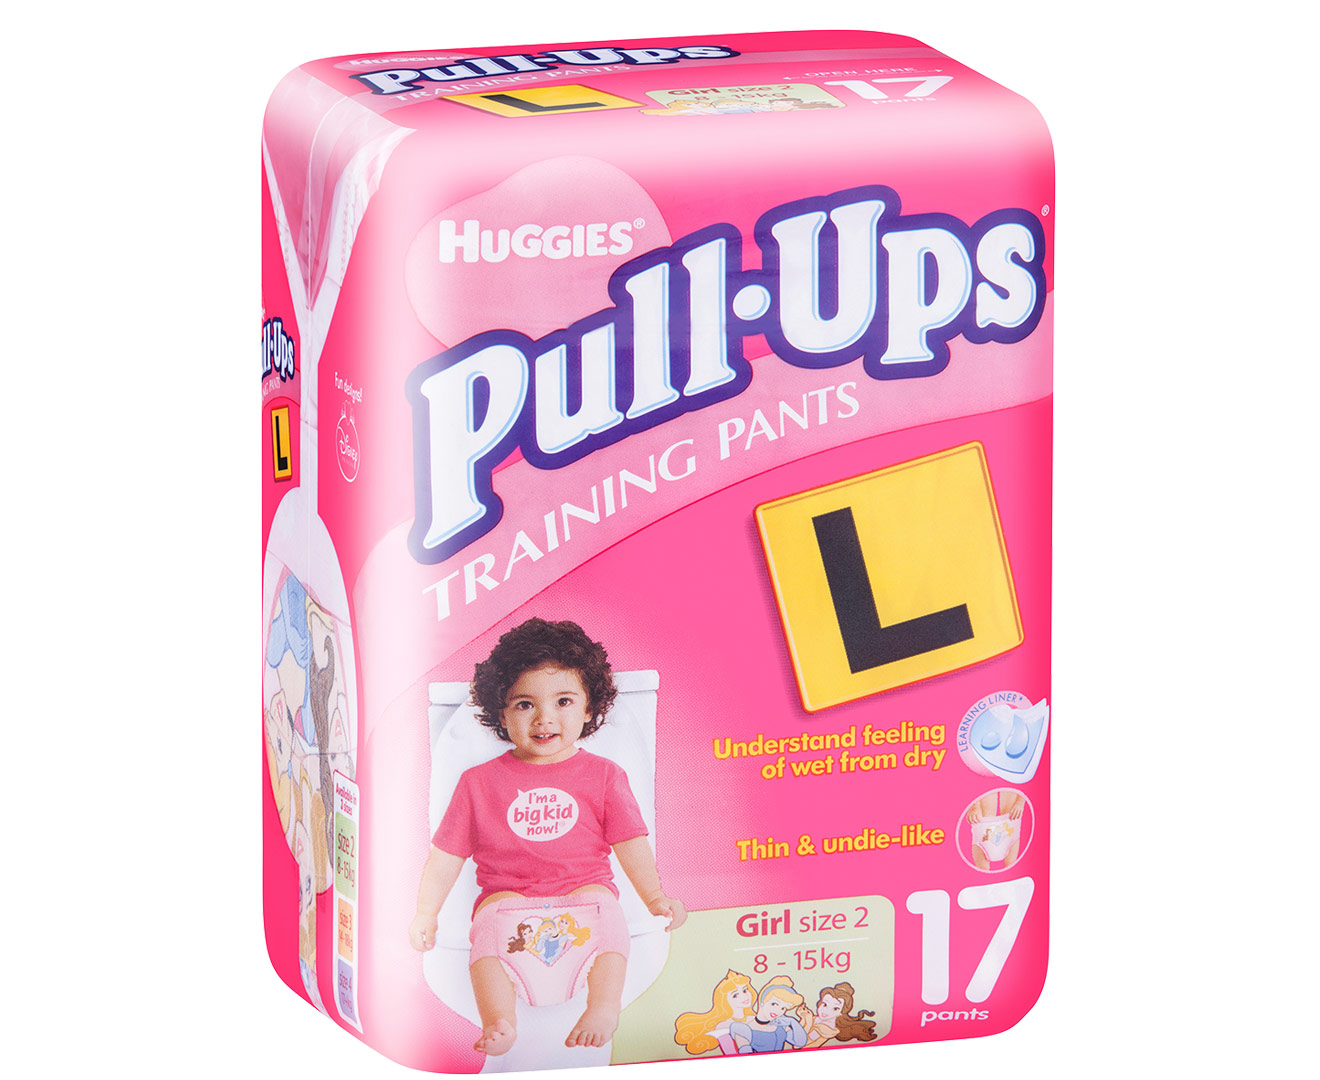 2 x Huggies Pull-Ups Training Pants Size 2 Girls 8-15kg 17pk